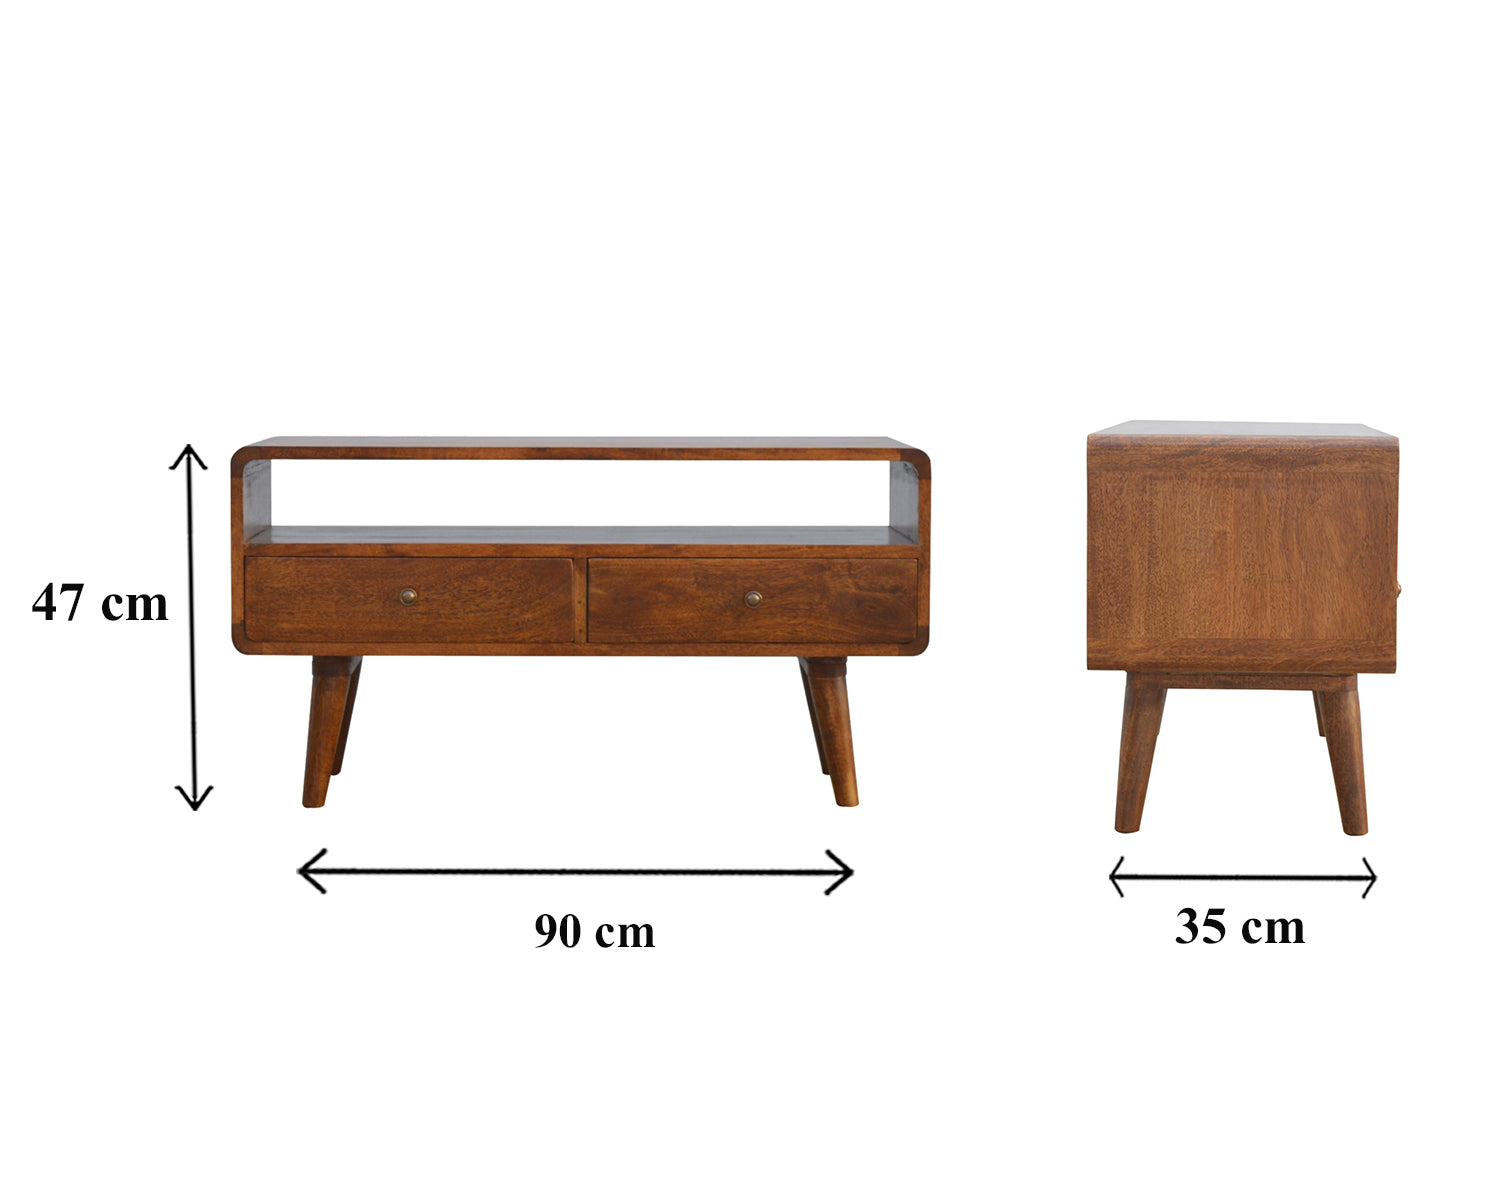 Century handmade wooden TV stand with 2 drawers in deep chestnut finish  | malletandplane.com 